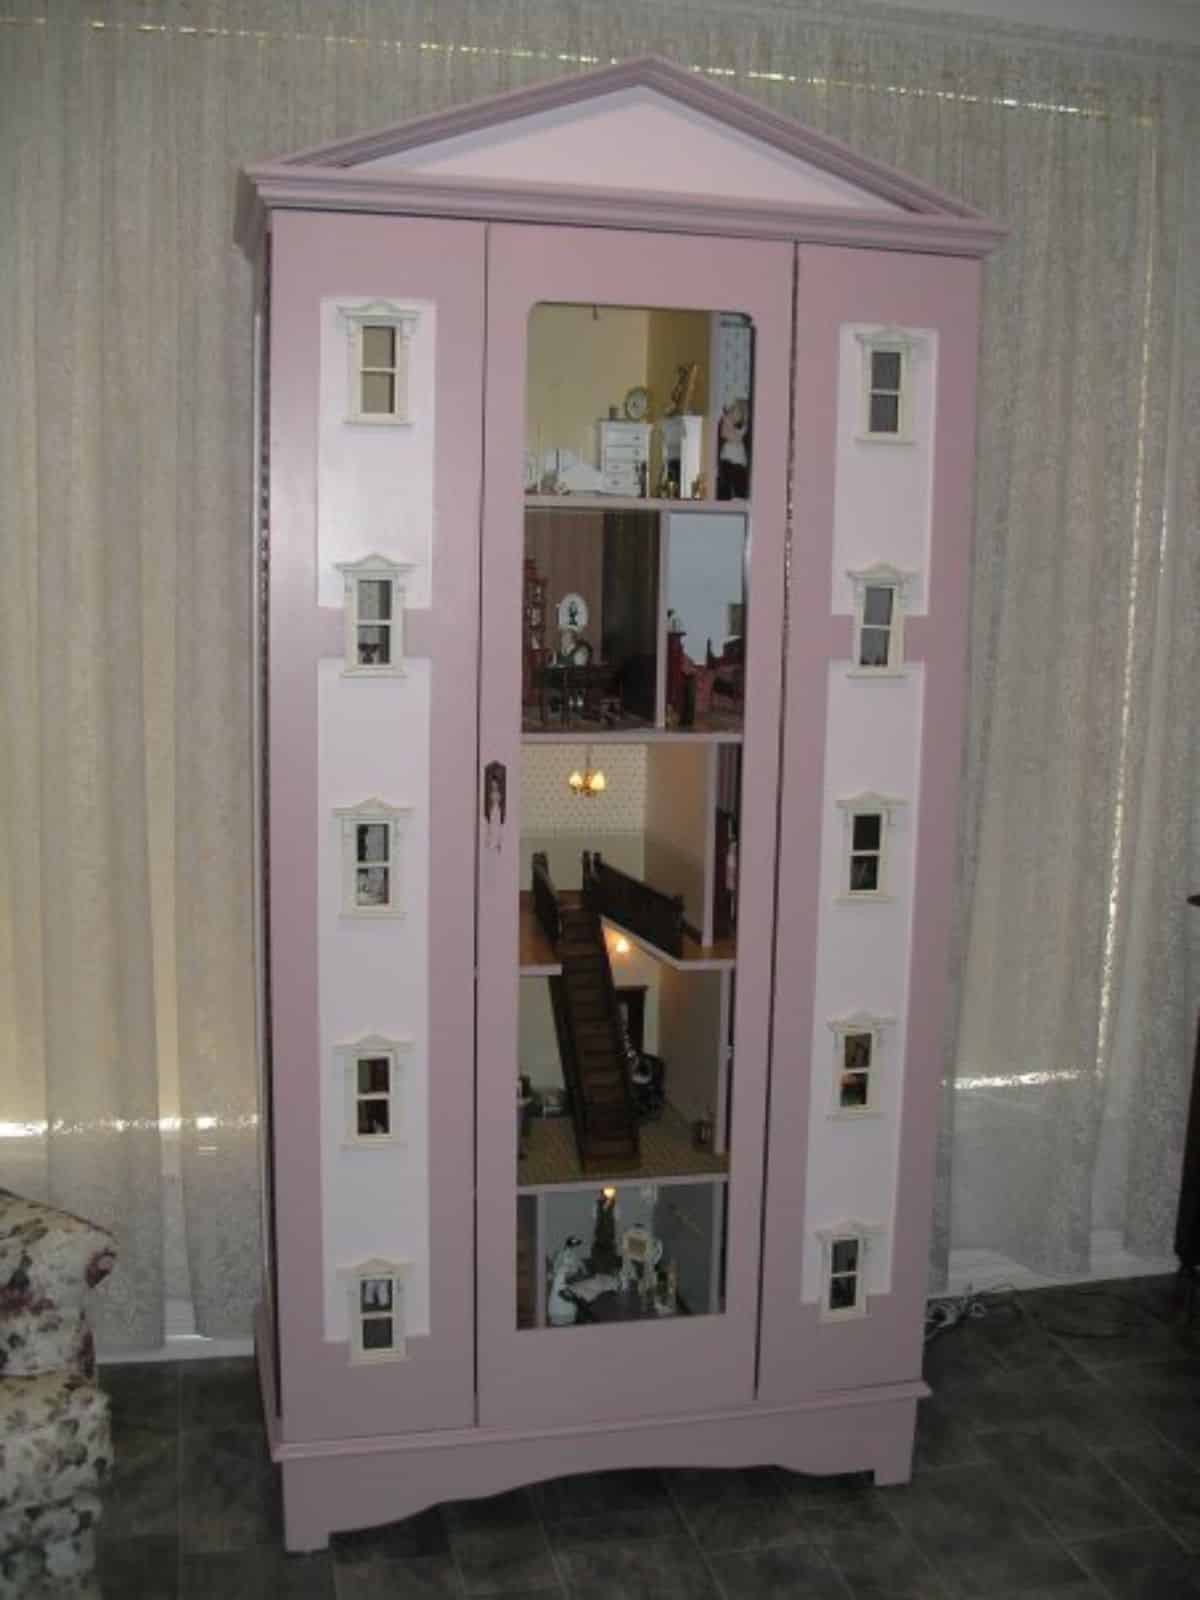 Repurposed Cabinet to Amazing Dollhouse